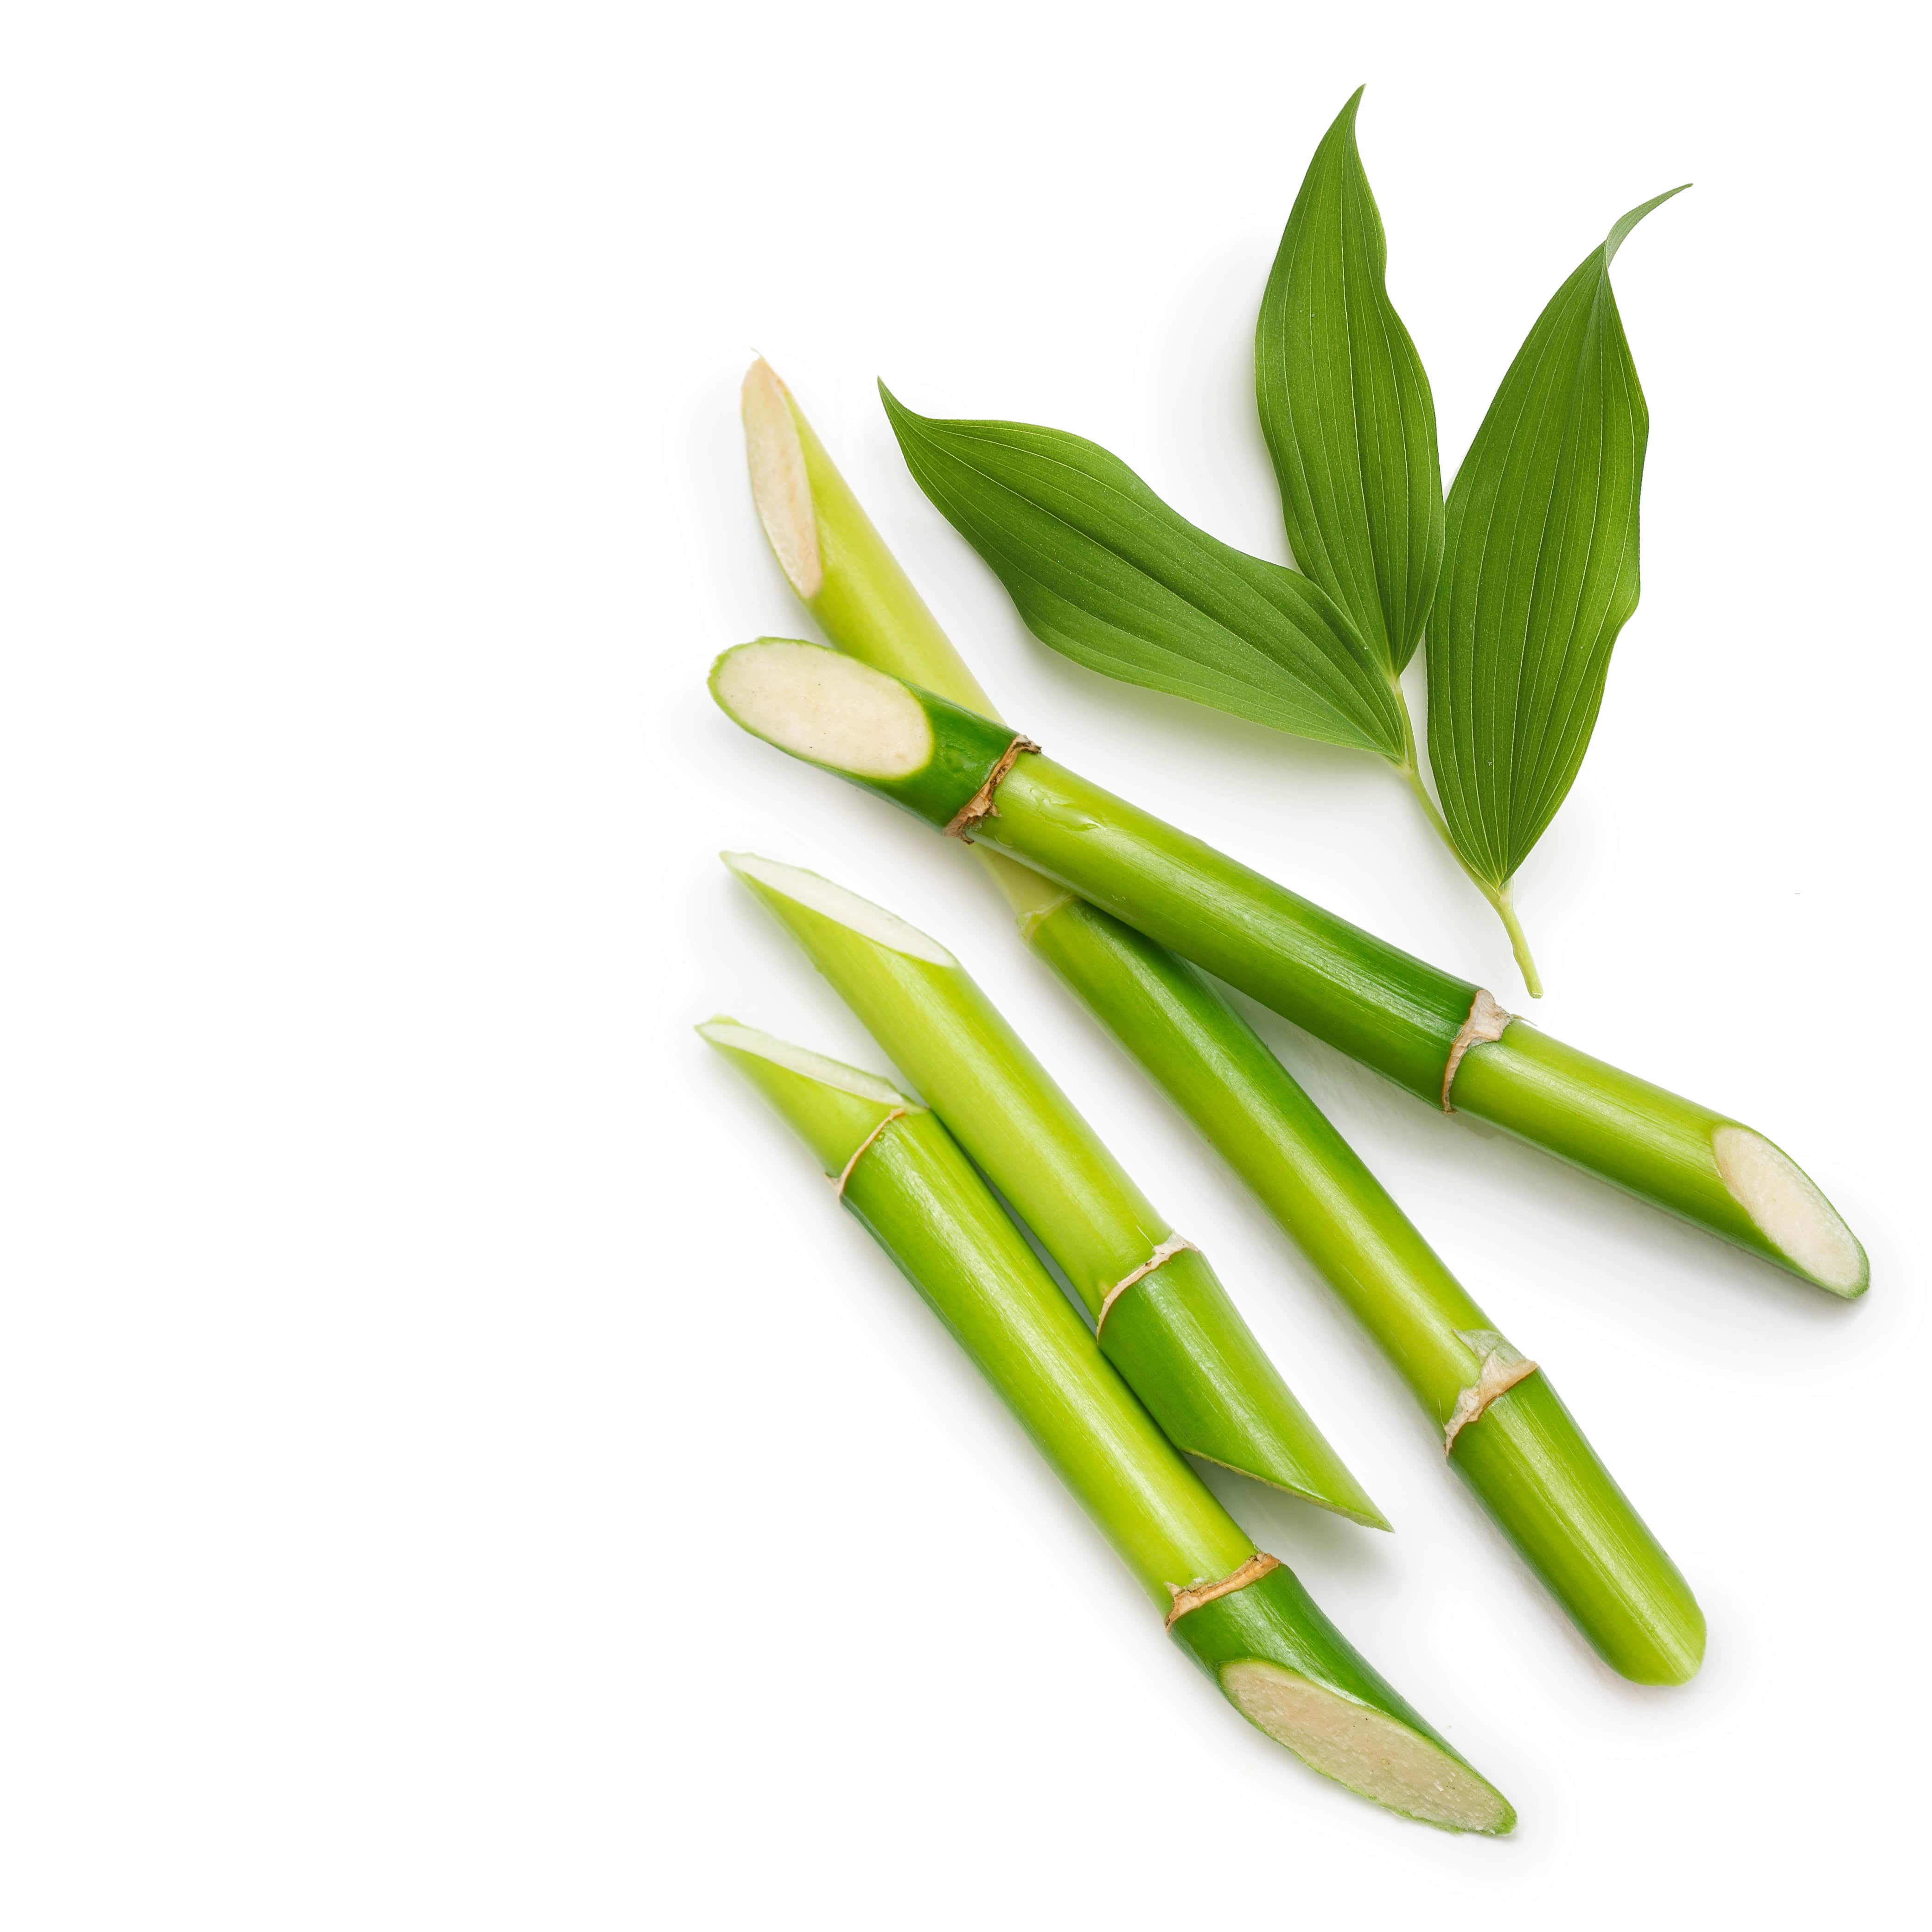 Bamboo Garden Fragrance Oil for Soaps & Candles